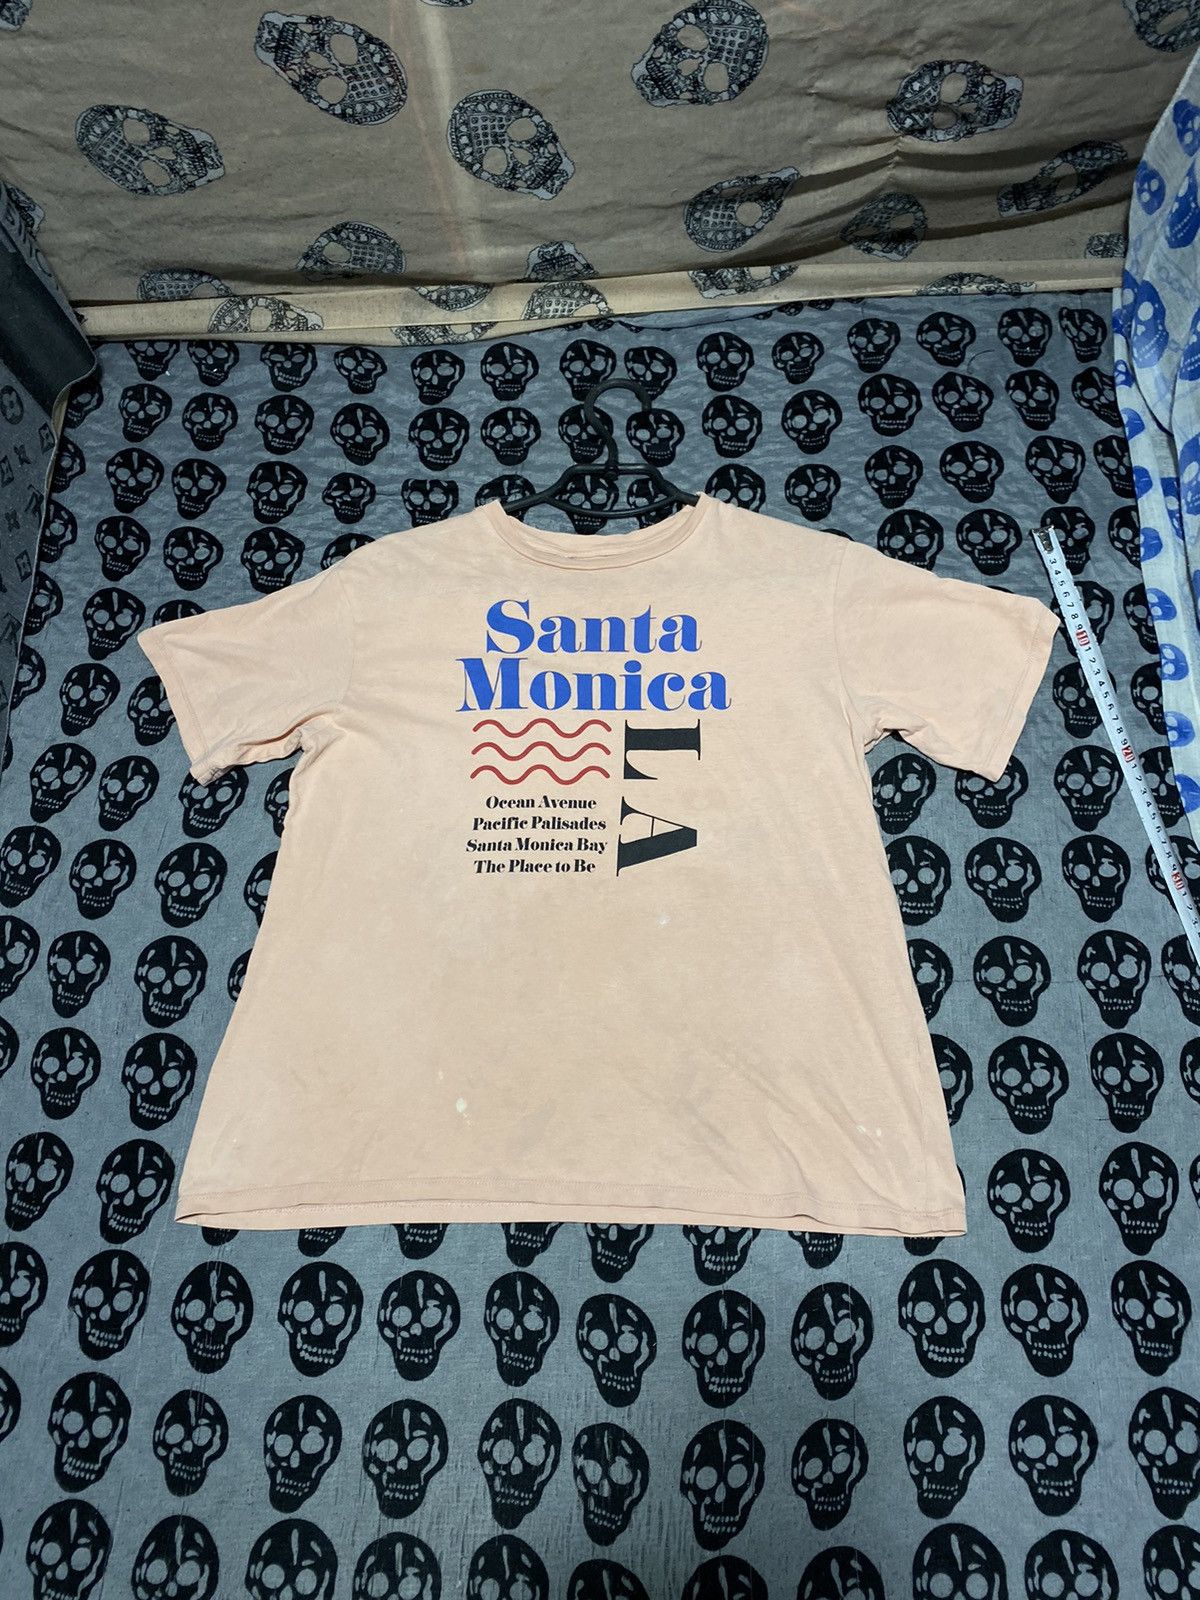 Vintage 90's Bitch Skateboard T Shirt / Skate /punk / Powell